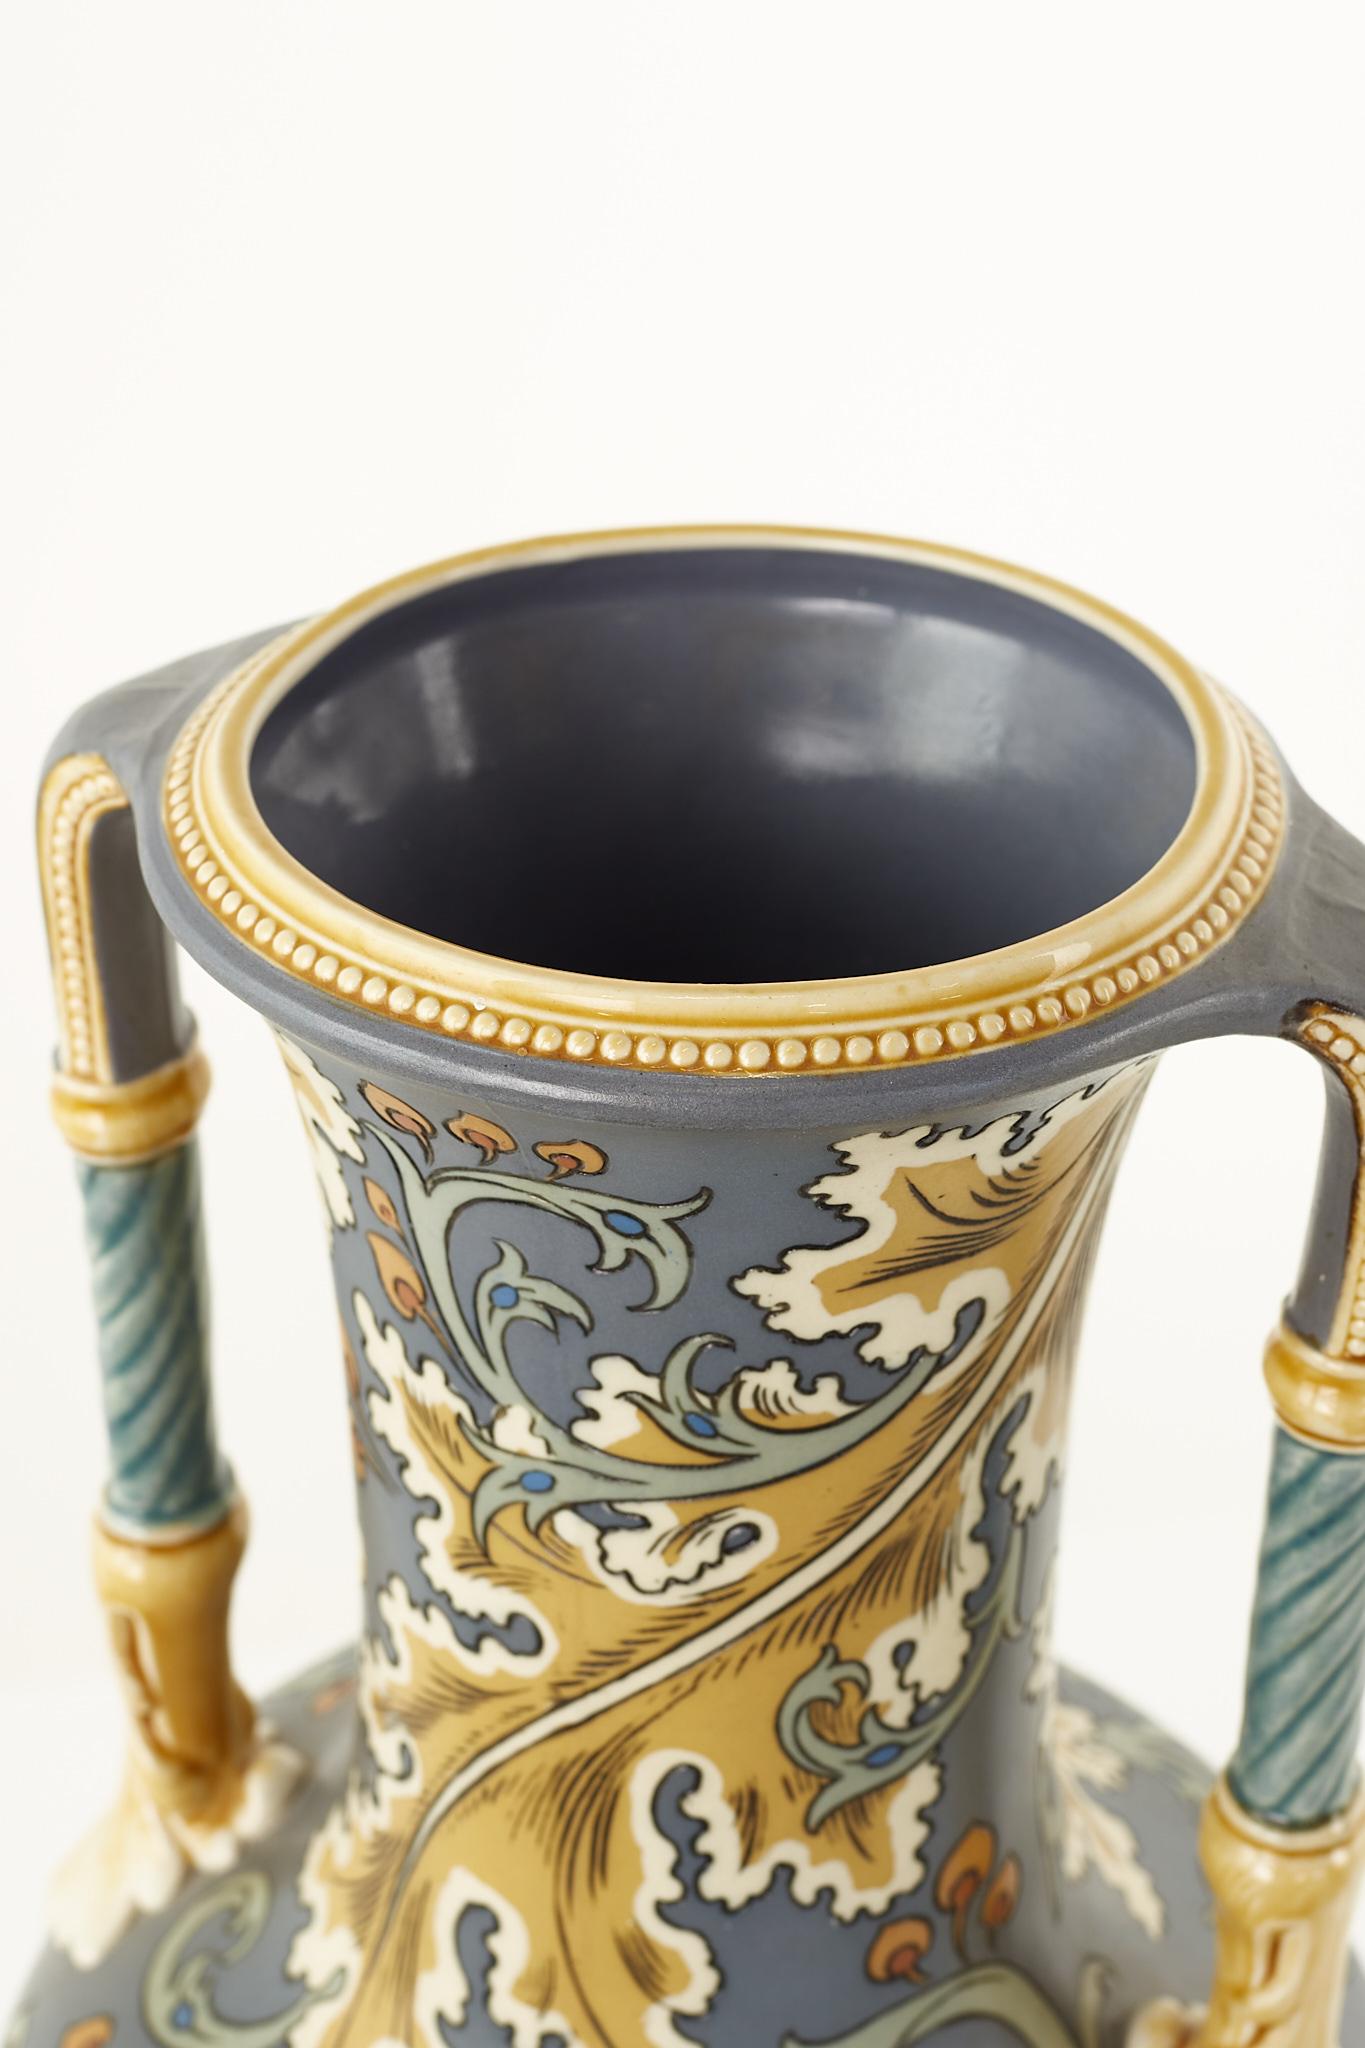 Floral Art Nouveau Vase by Mettlach, Later Villeroy & Boch, a Pair For Sale 6